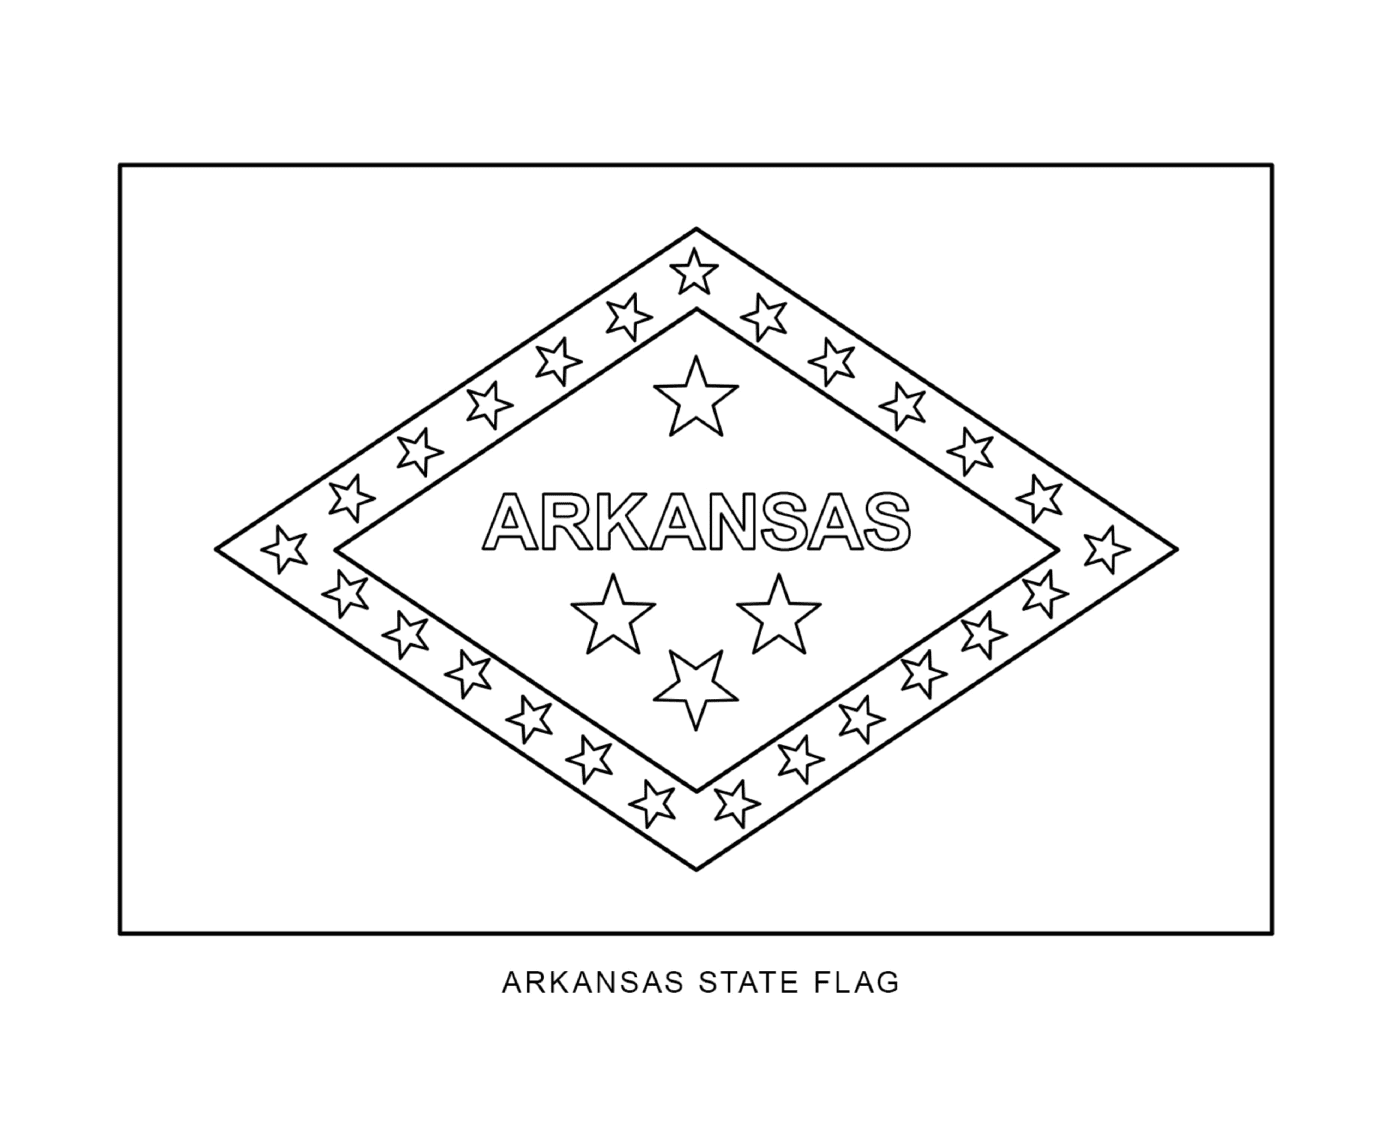  Flag of Arkansas State composed of stars 